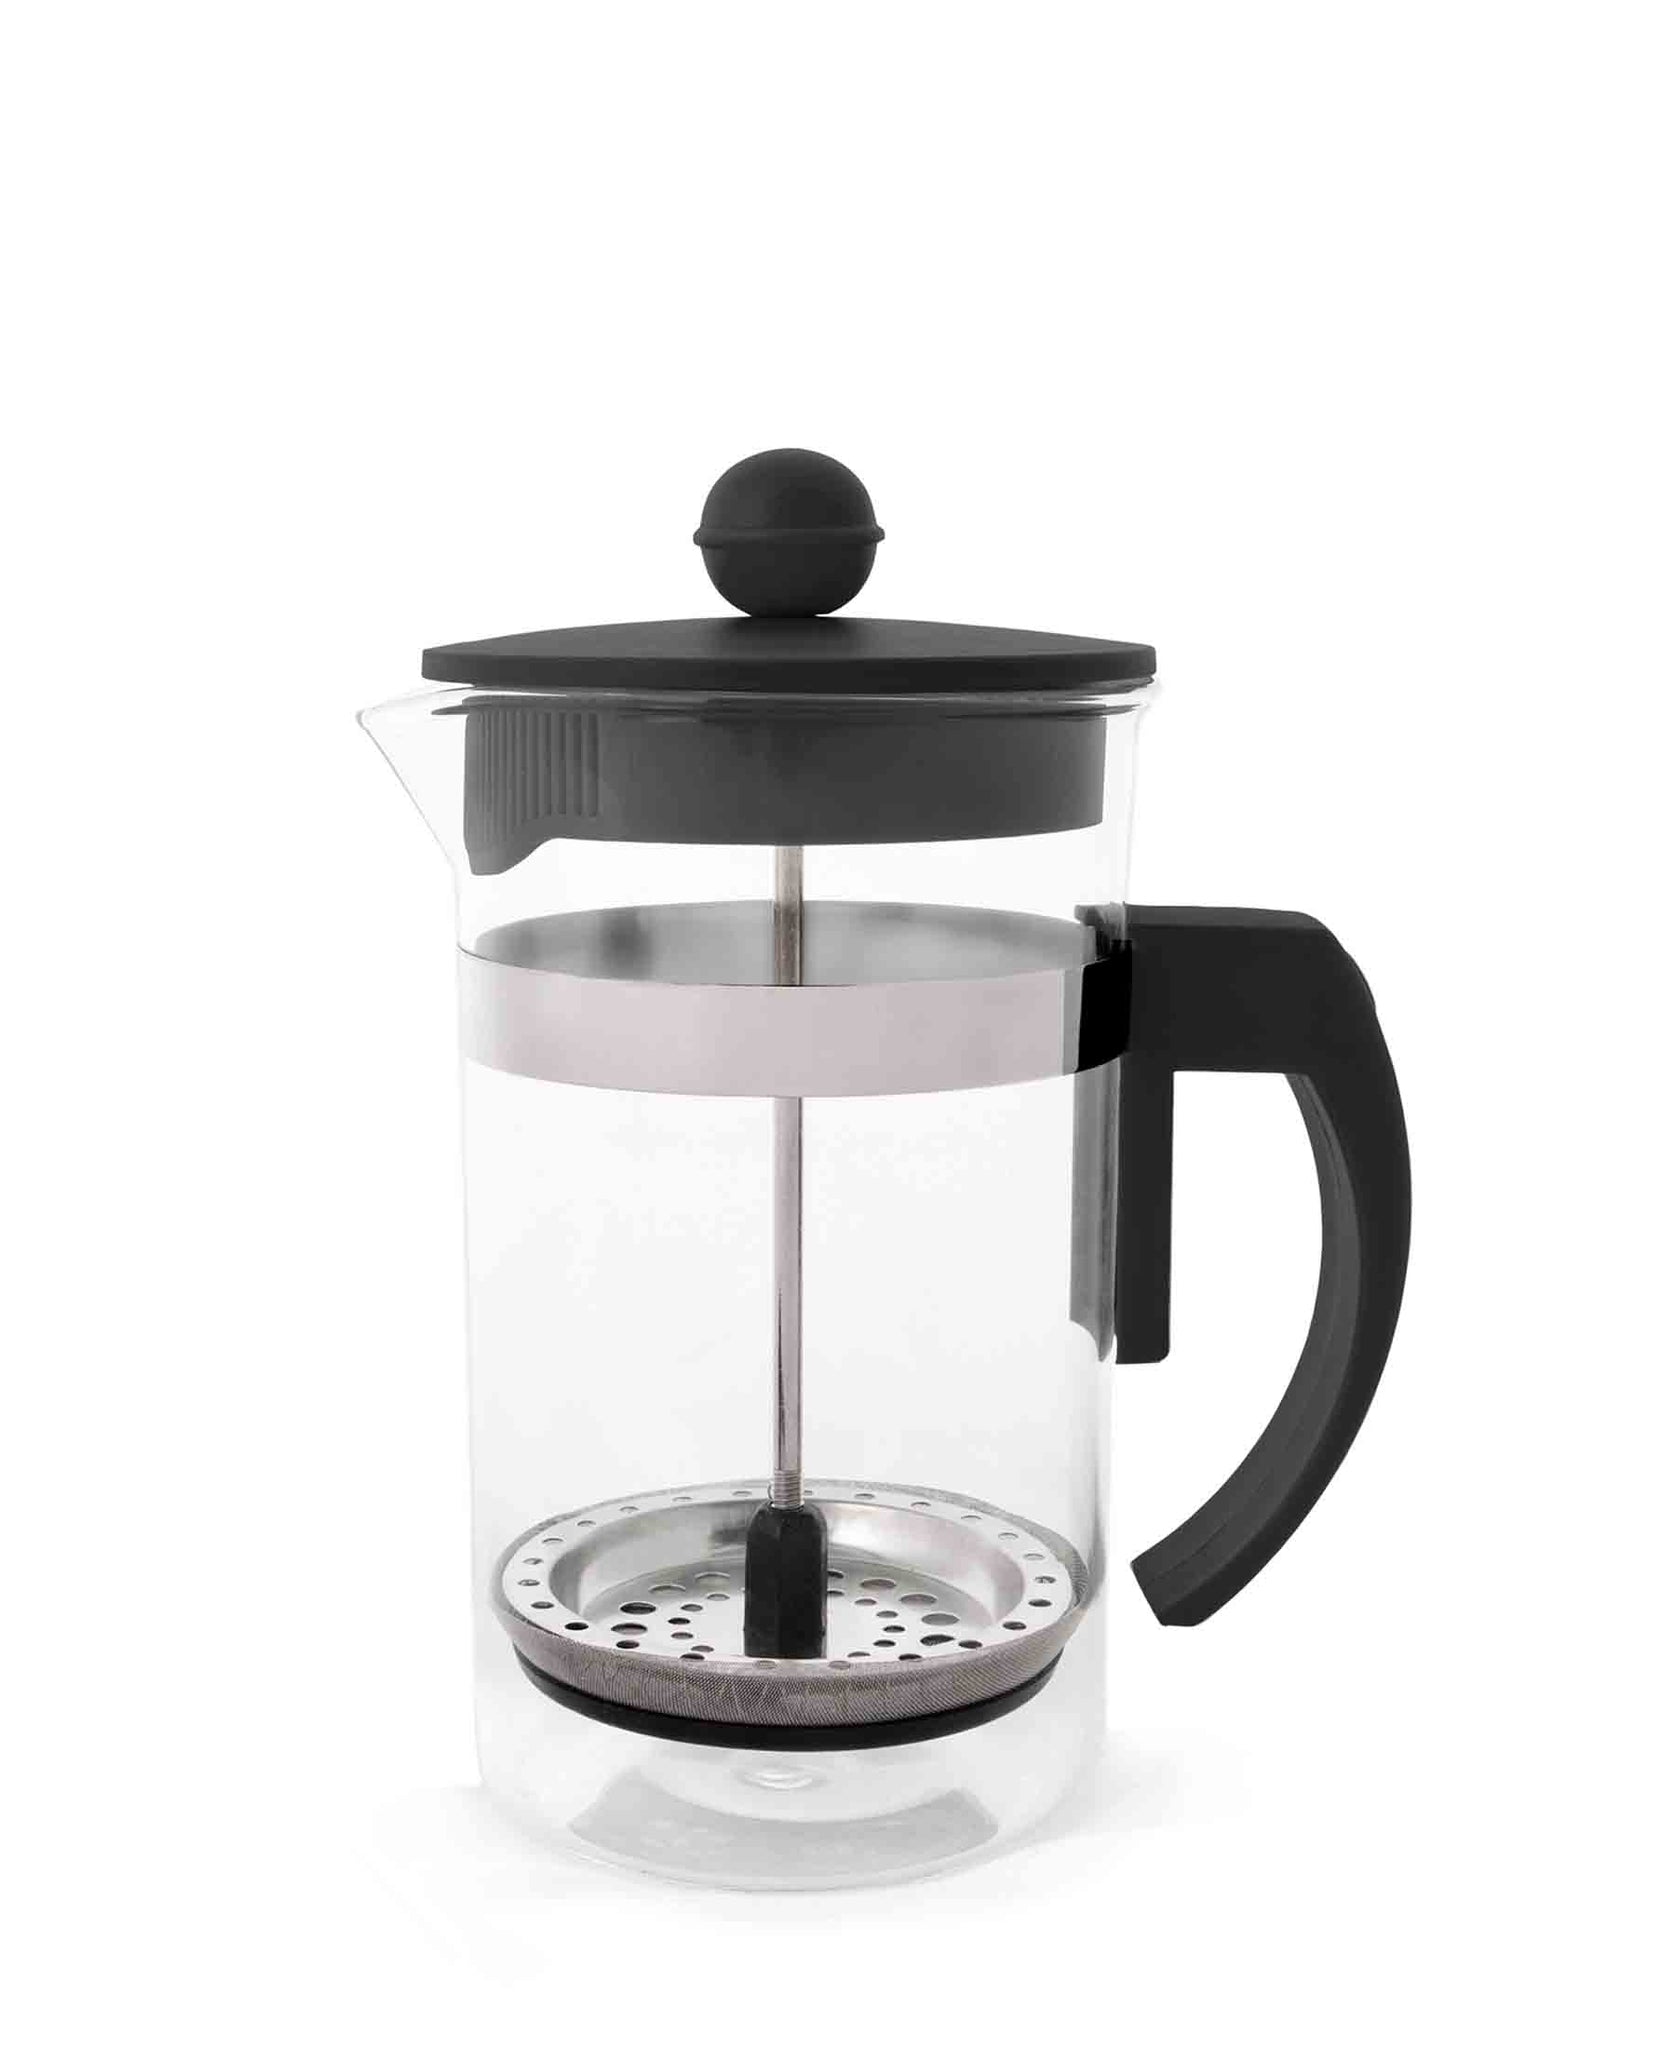 Eetrite Coffee Plunger 600ML - Black